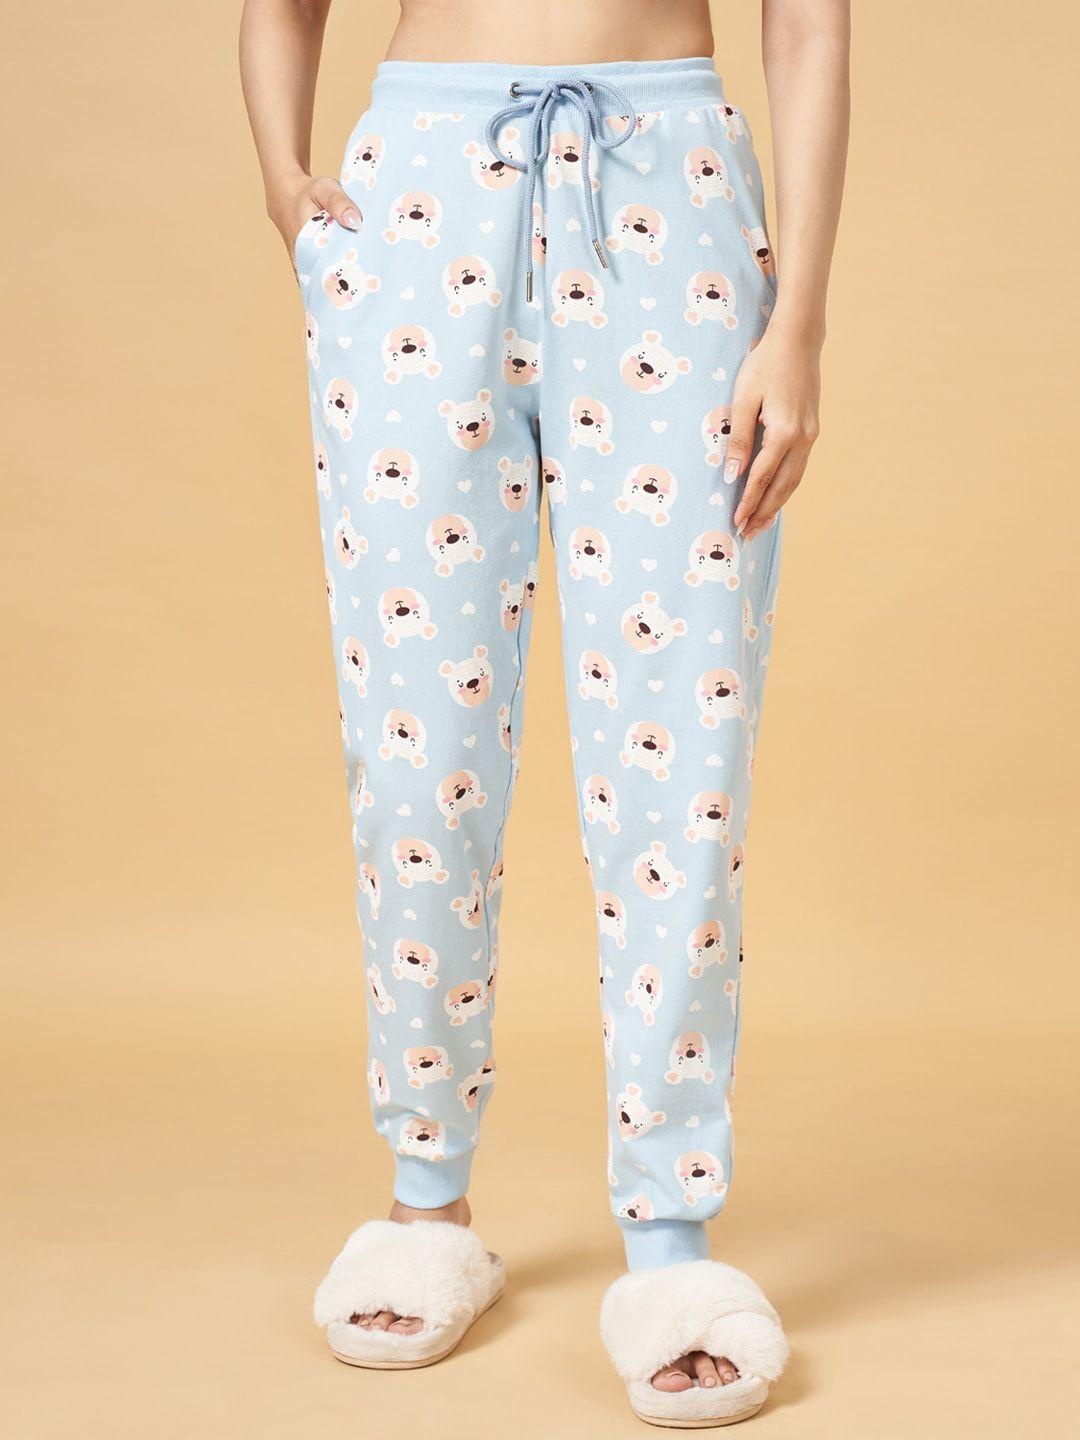 dreamz by pantaloons women mid-rise conversational printed cotton joggers